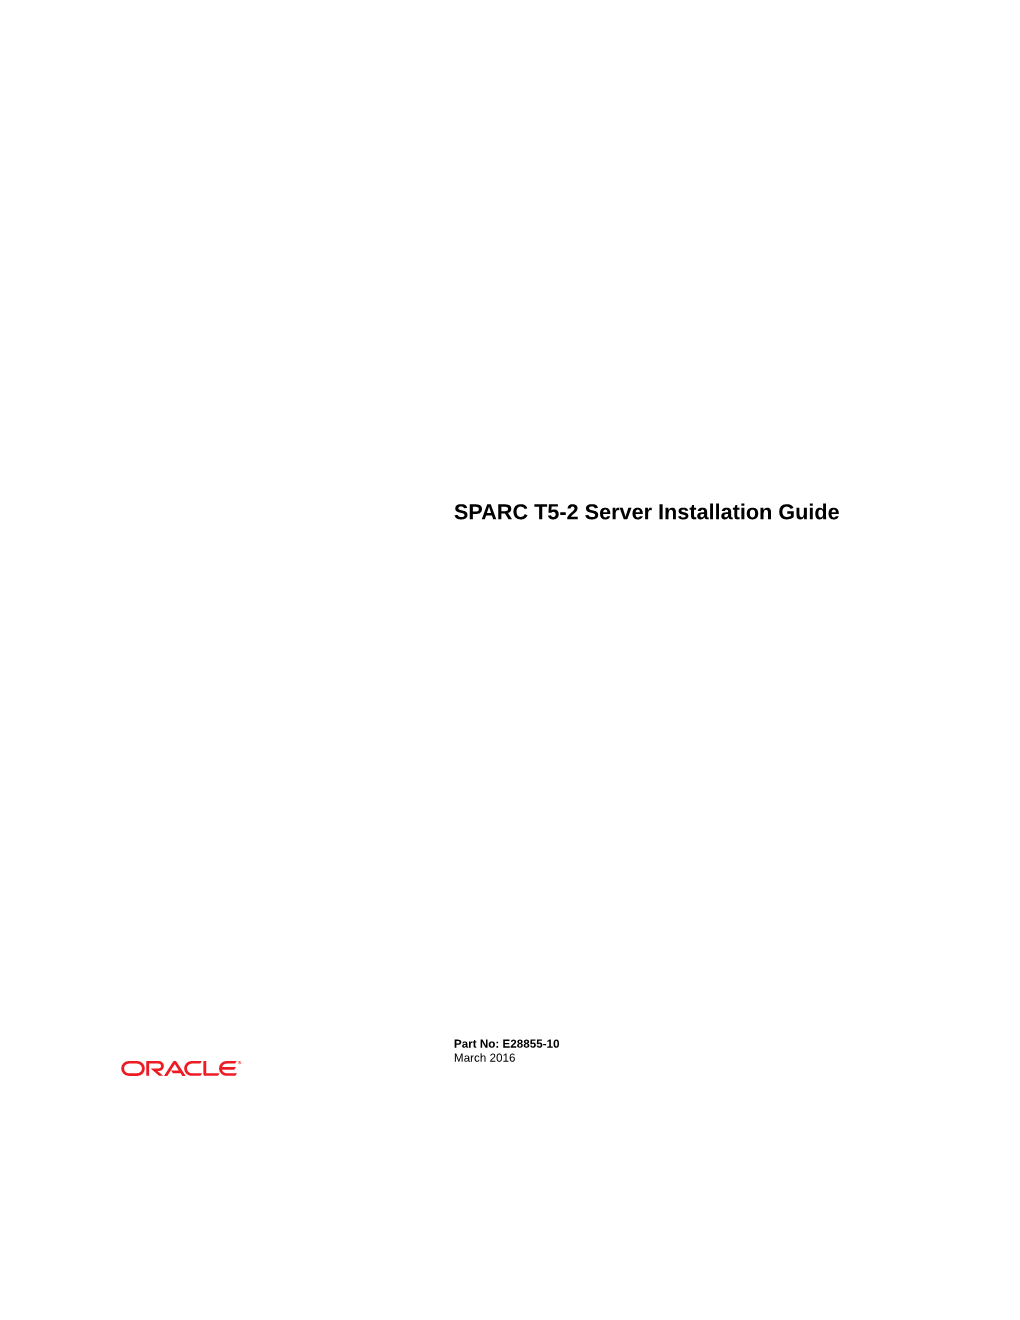 SPARC T5-2 Server Installation Guide